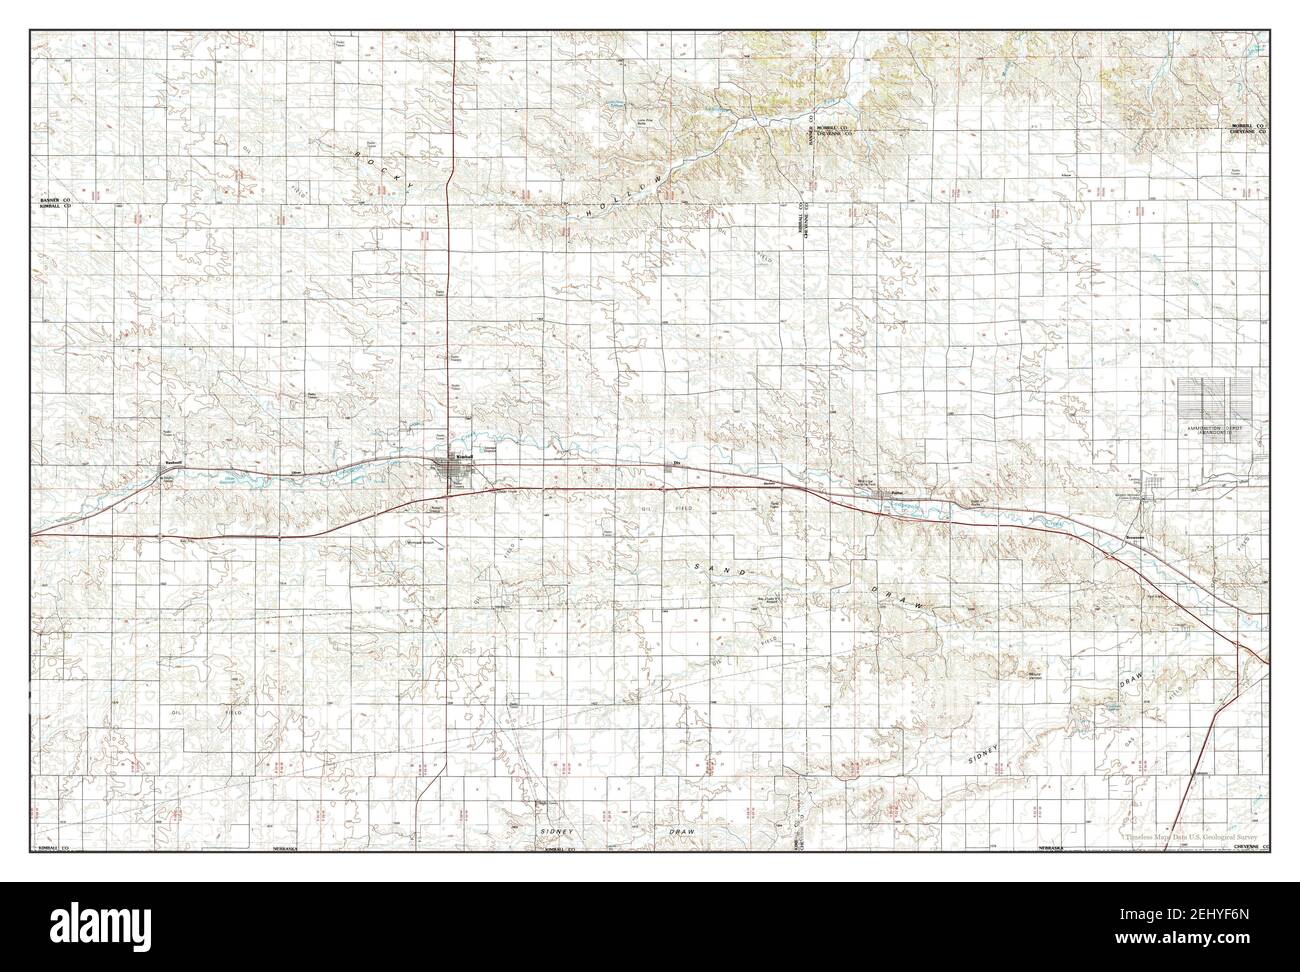 Kimball, Nebraska, map 1985, 1:100000, United States of America by Timeless Maps, data U.S. Geological Survey Stock Photo